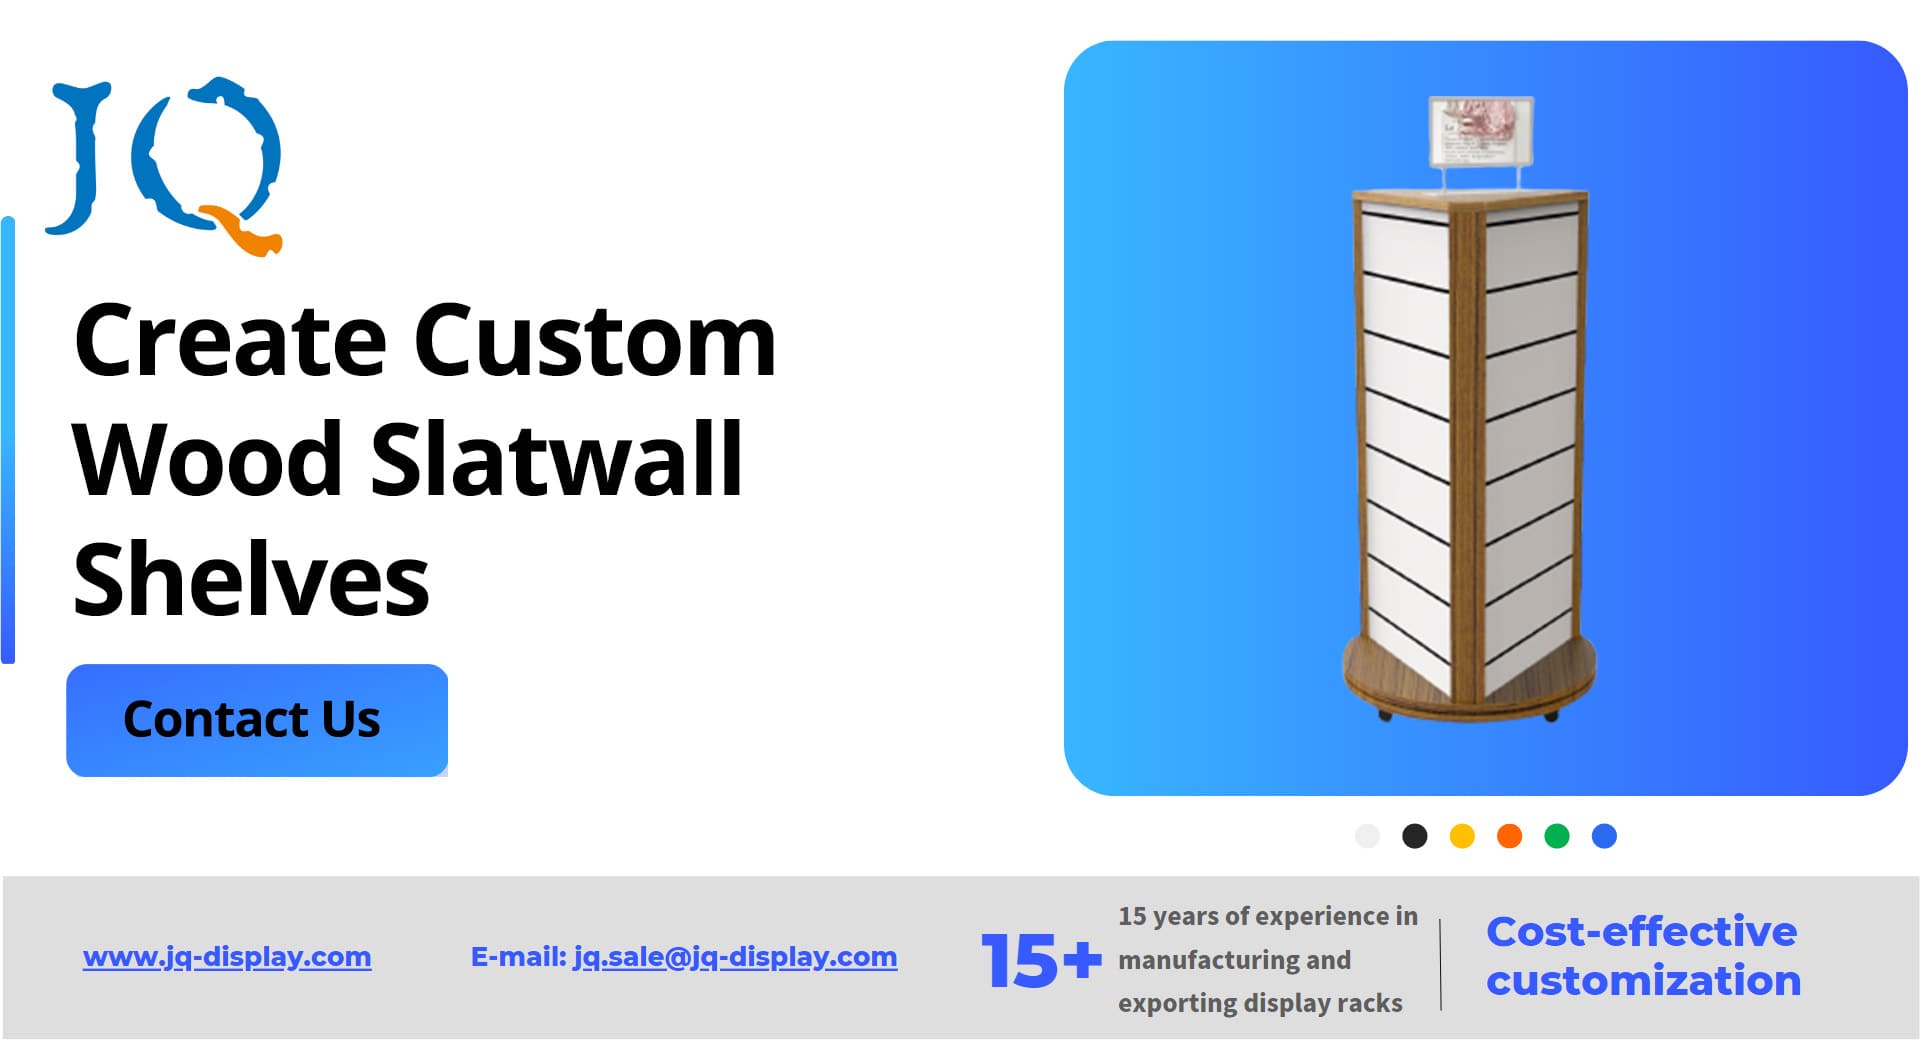 Create Custom Wood Slatwall Shelves